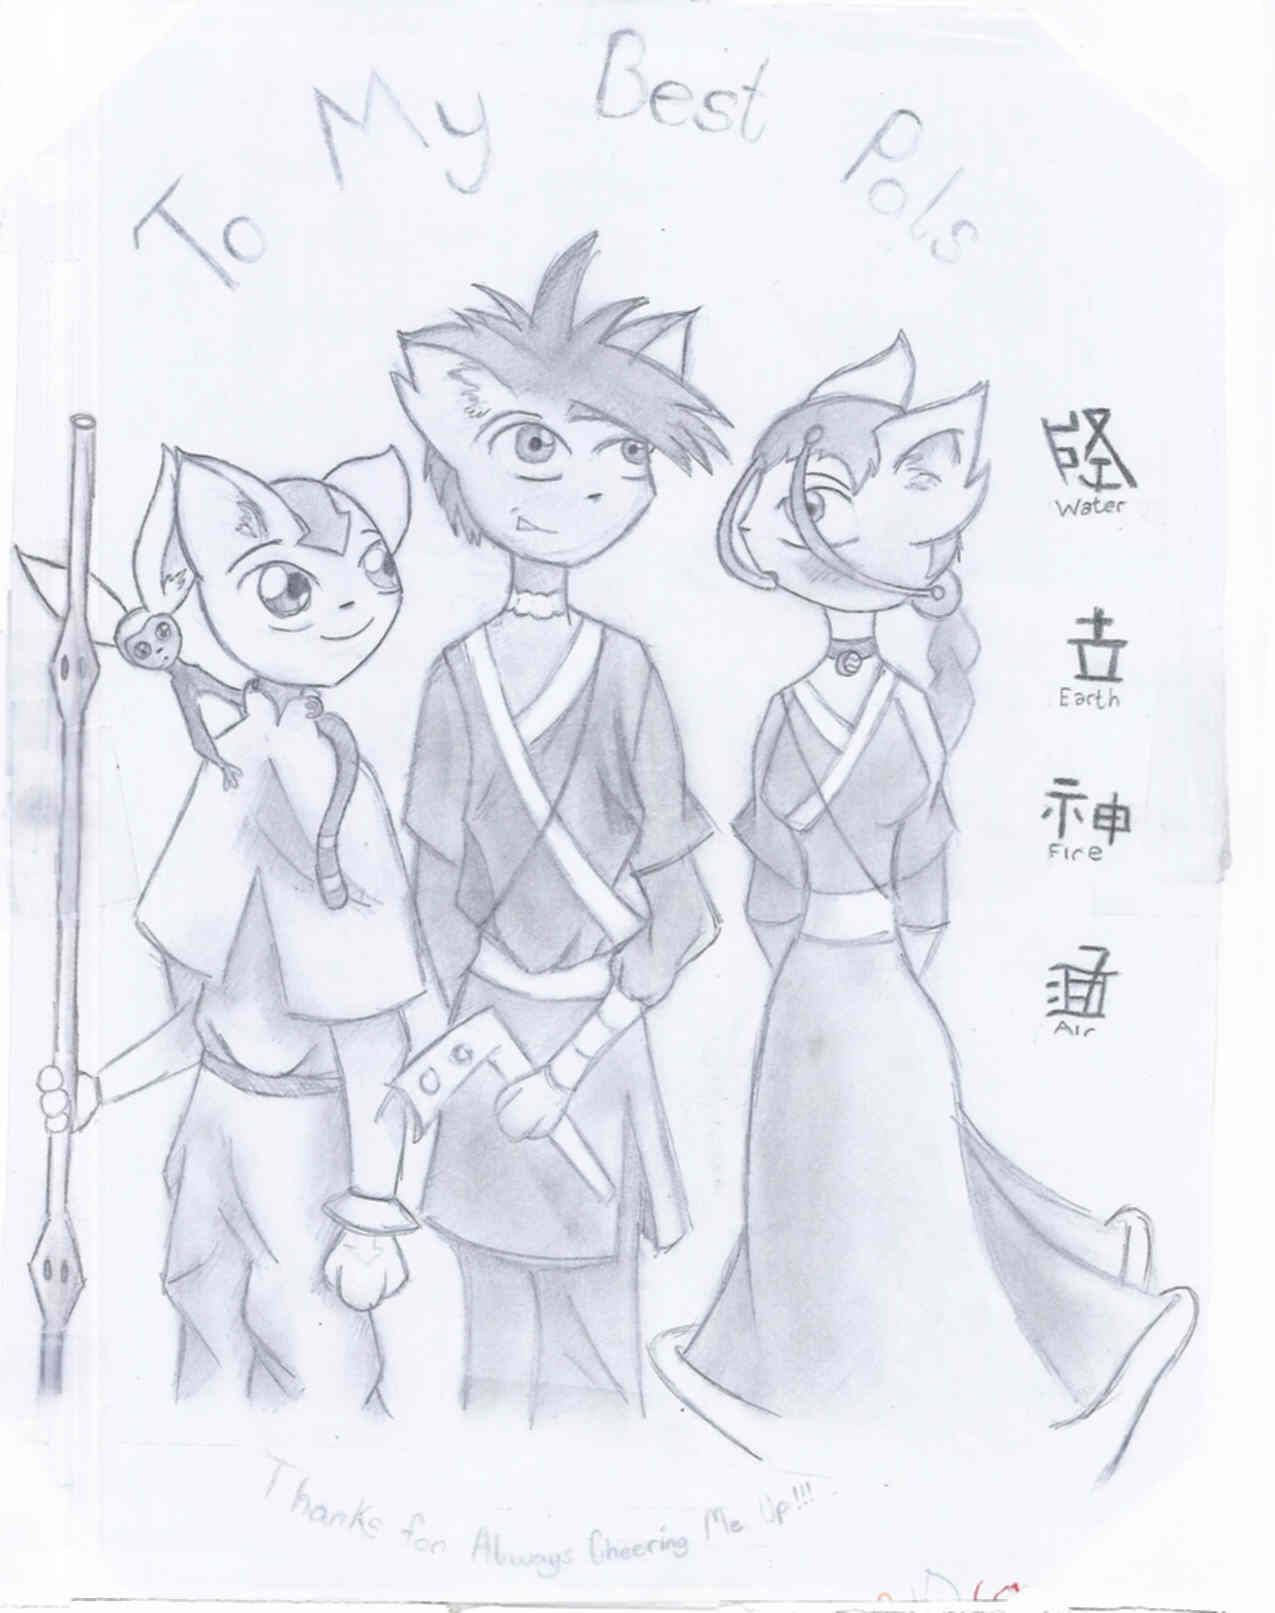 Aang, Sokka, and Katara as Cats(?) by Shadowe_Phoenix